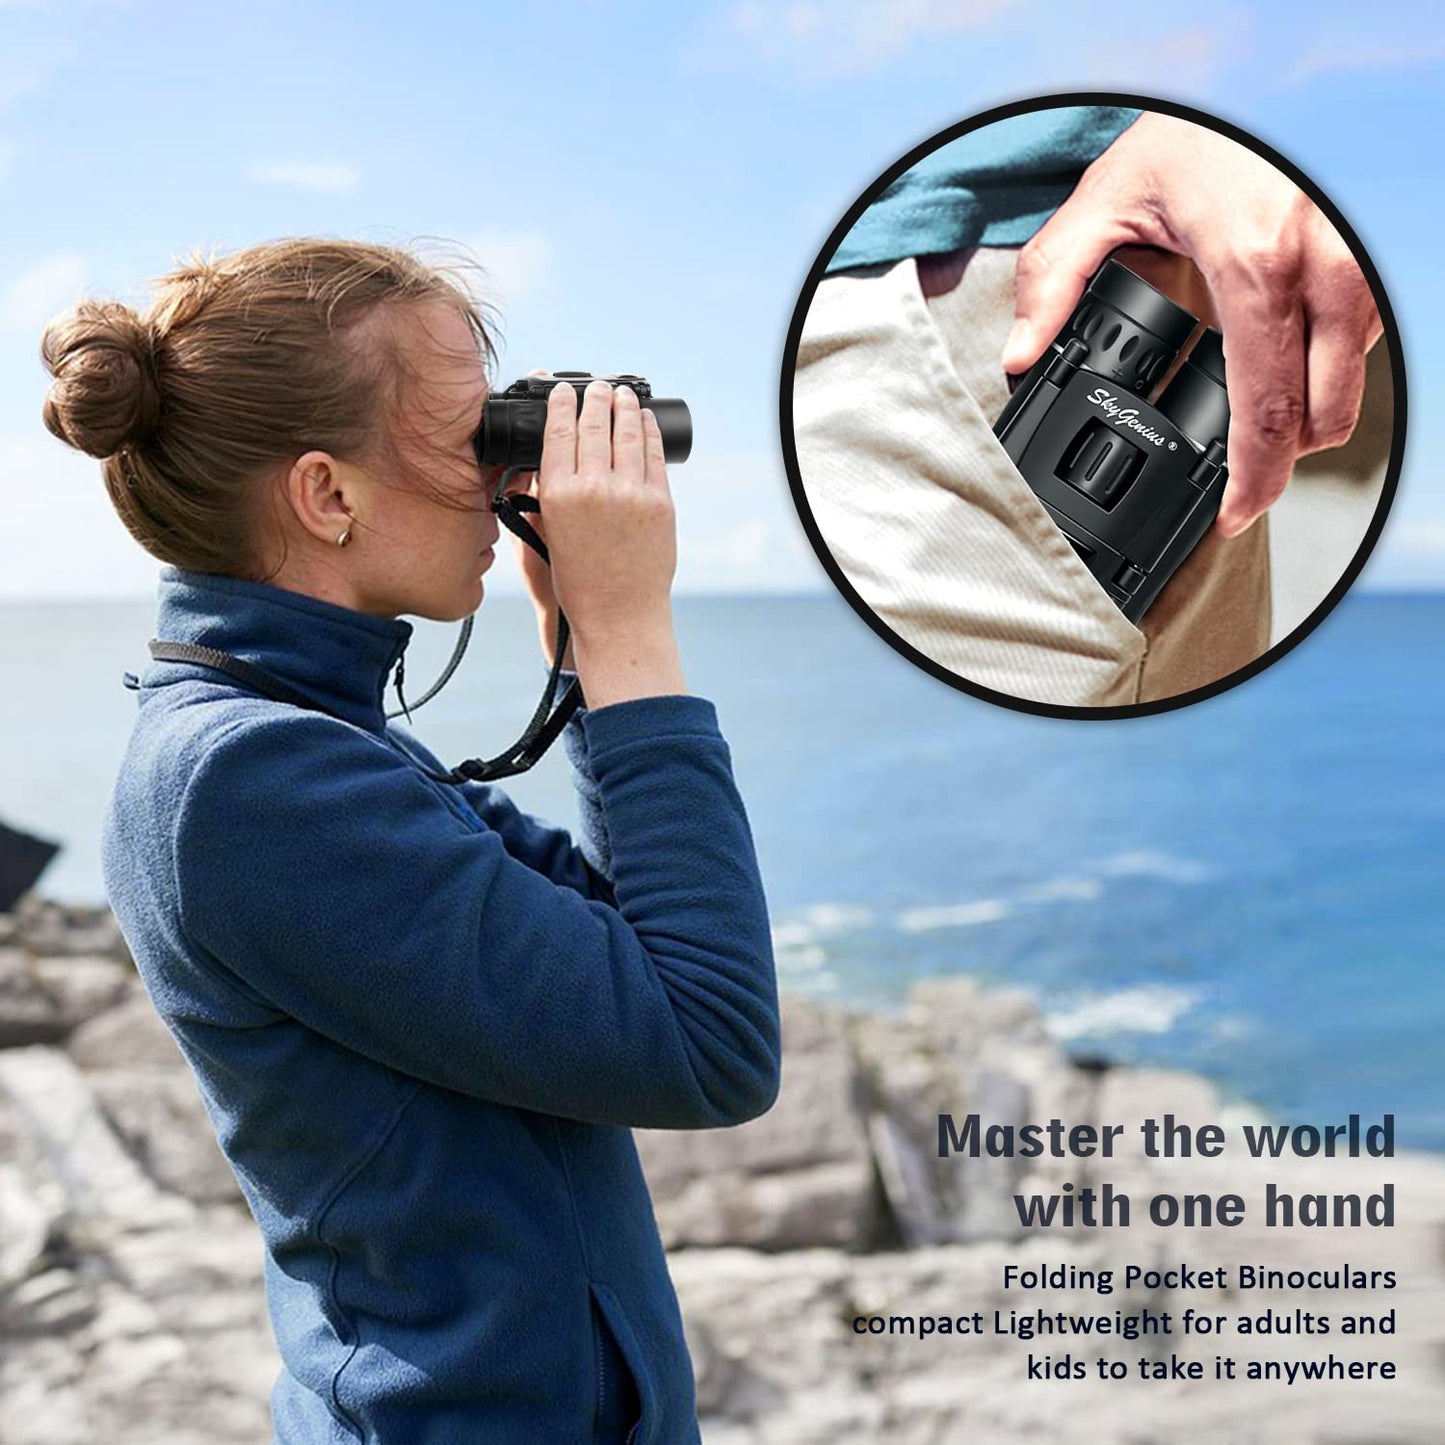 SkyGenius 8x21 Small Compact Lightweight Binoculars for Concert Theater Opera .Mini Pocket Folding Binoculars w/Fully Coated Lens for Travel Hiking Bird Watching Adults Kids(0.38lb)